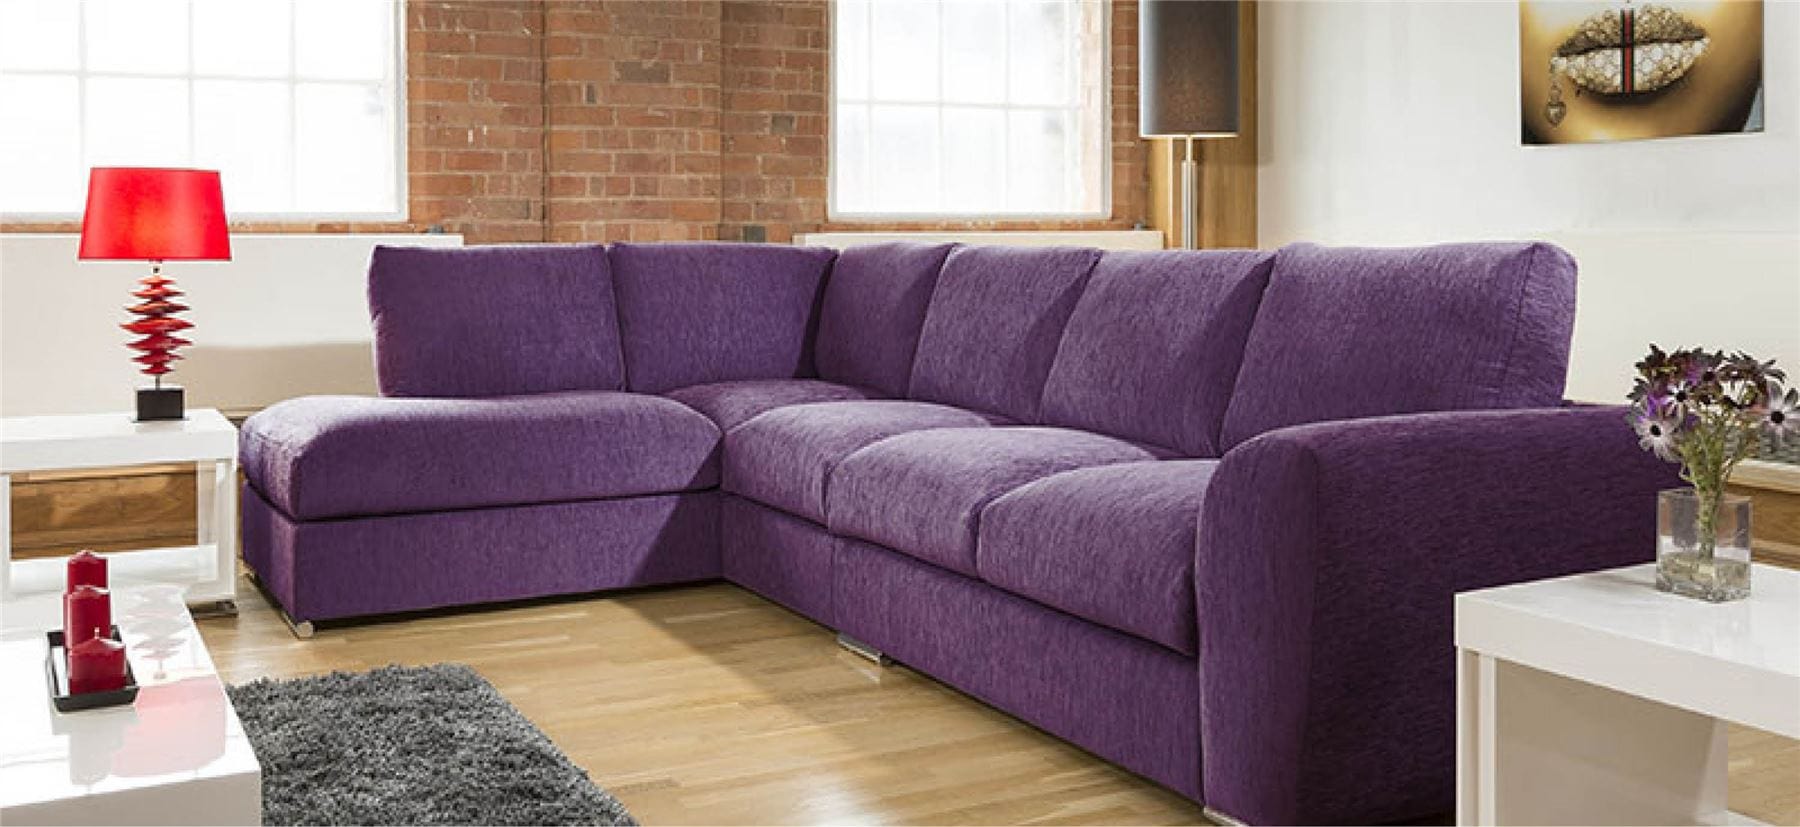 Quatropi Extra Large L Shape Sofa Set Settee Corner Group 335x210cm Grey L